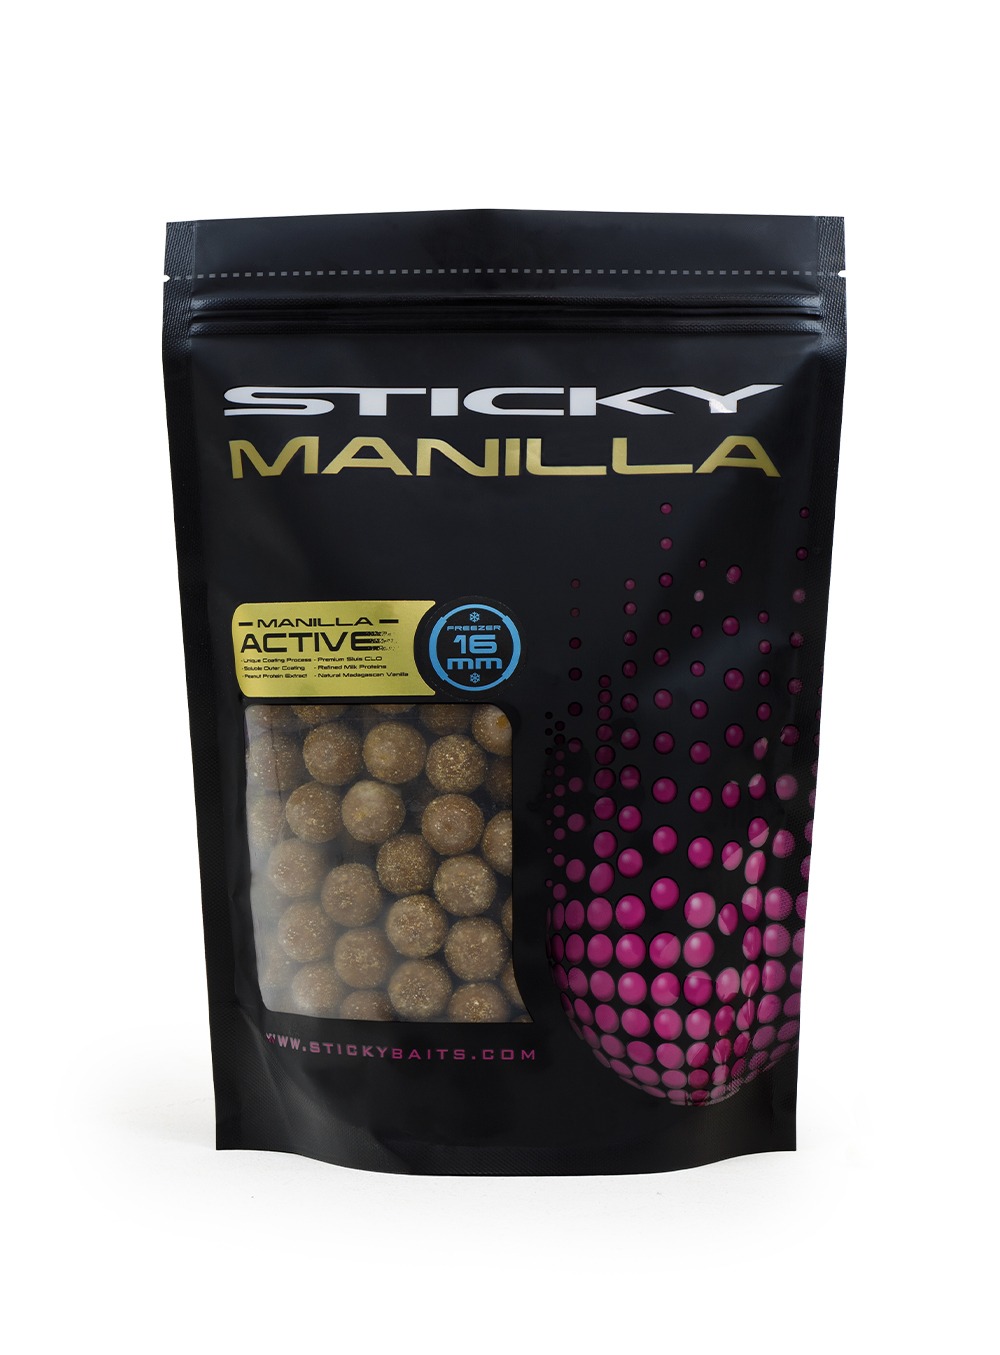 Sticky Baits - Products - Manilla Active Freezer Boilies - Carp Fishing Bait